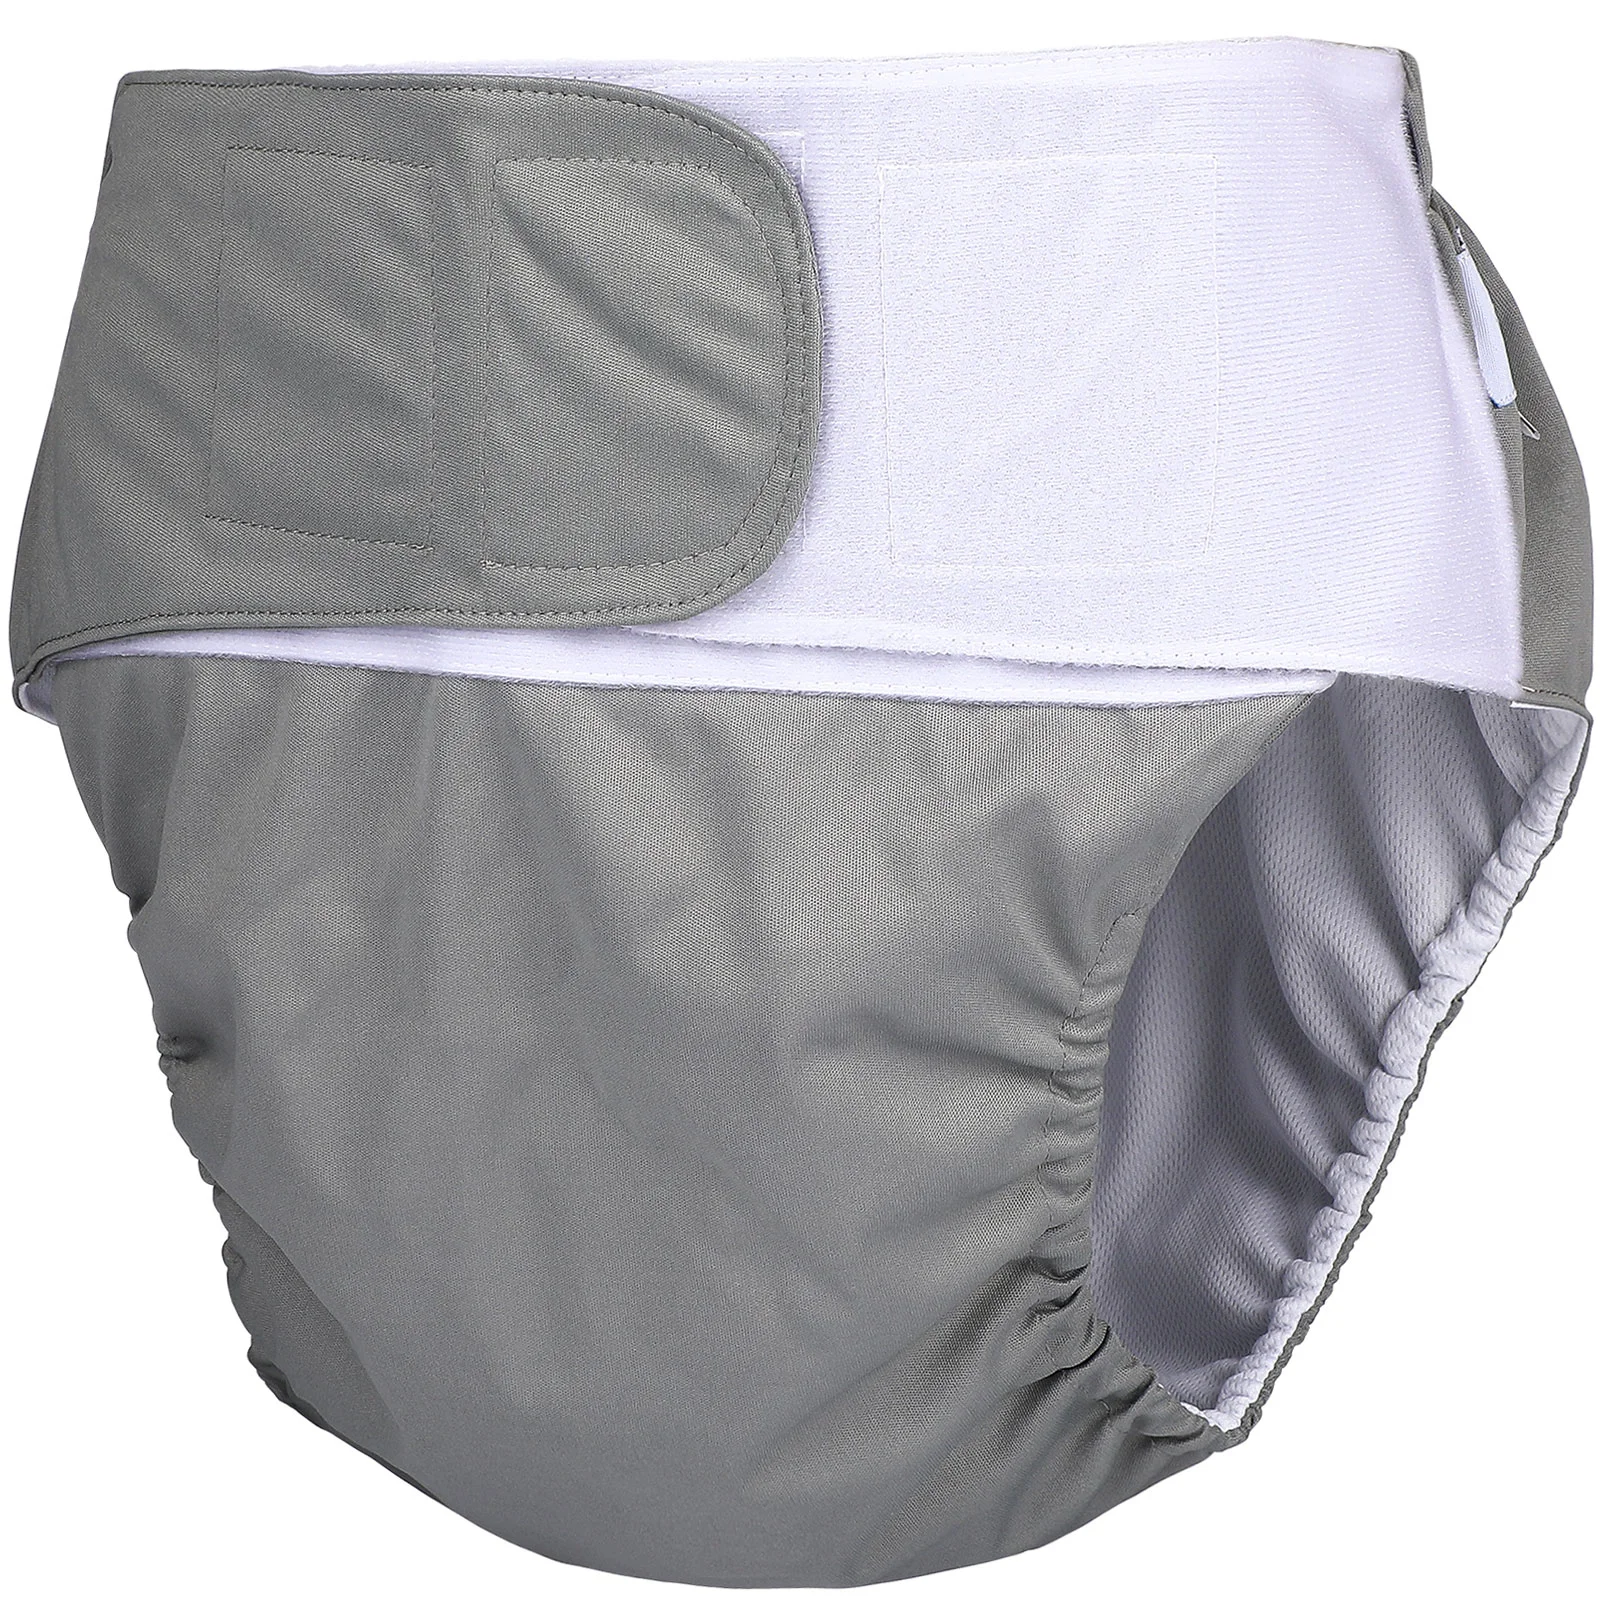 Waterproof Men Washable Adult Cloth Diaper Inserts Leak-free Man